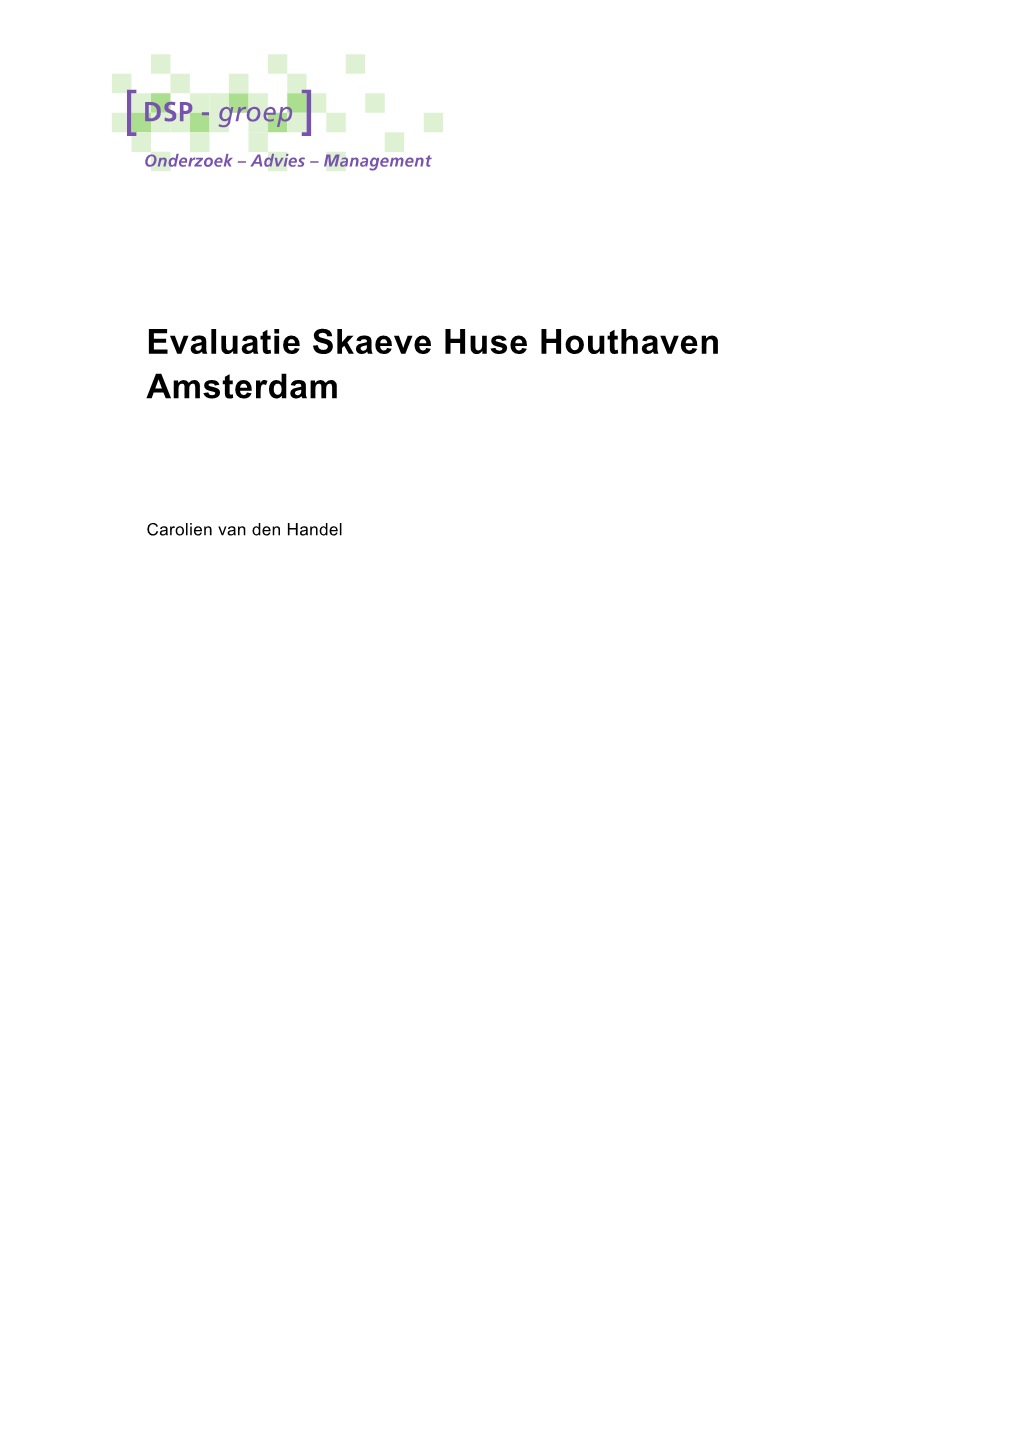 Evaluatie Skaeve Huse Houthaven Amsterdam